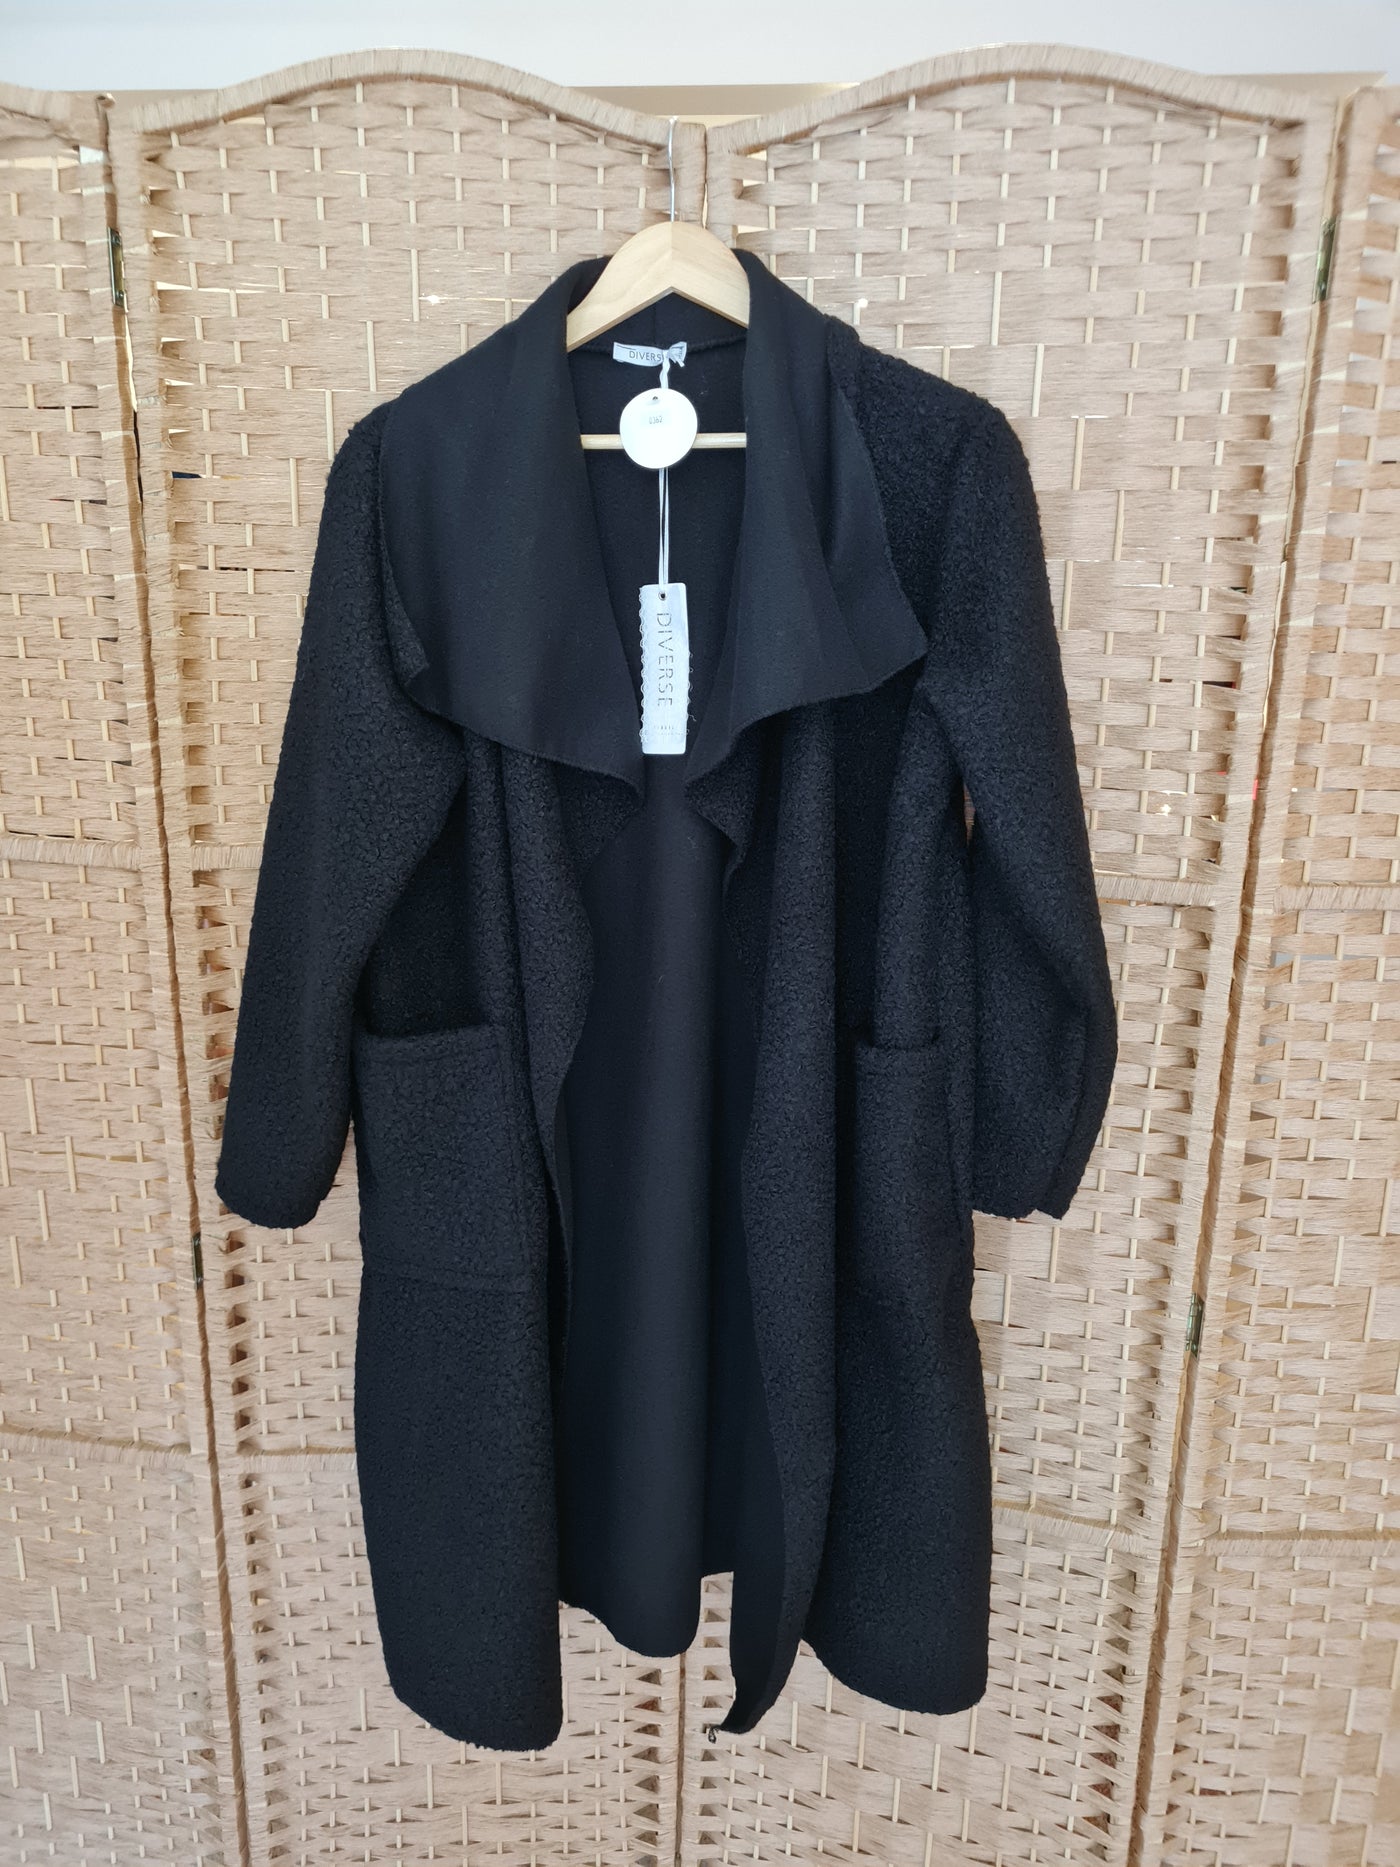 Boucle coat in black